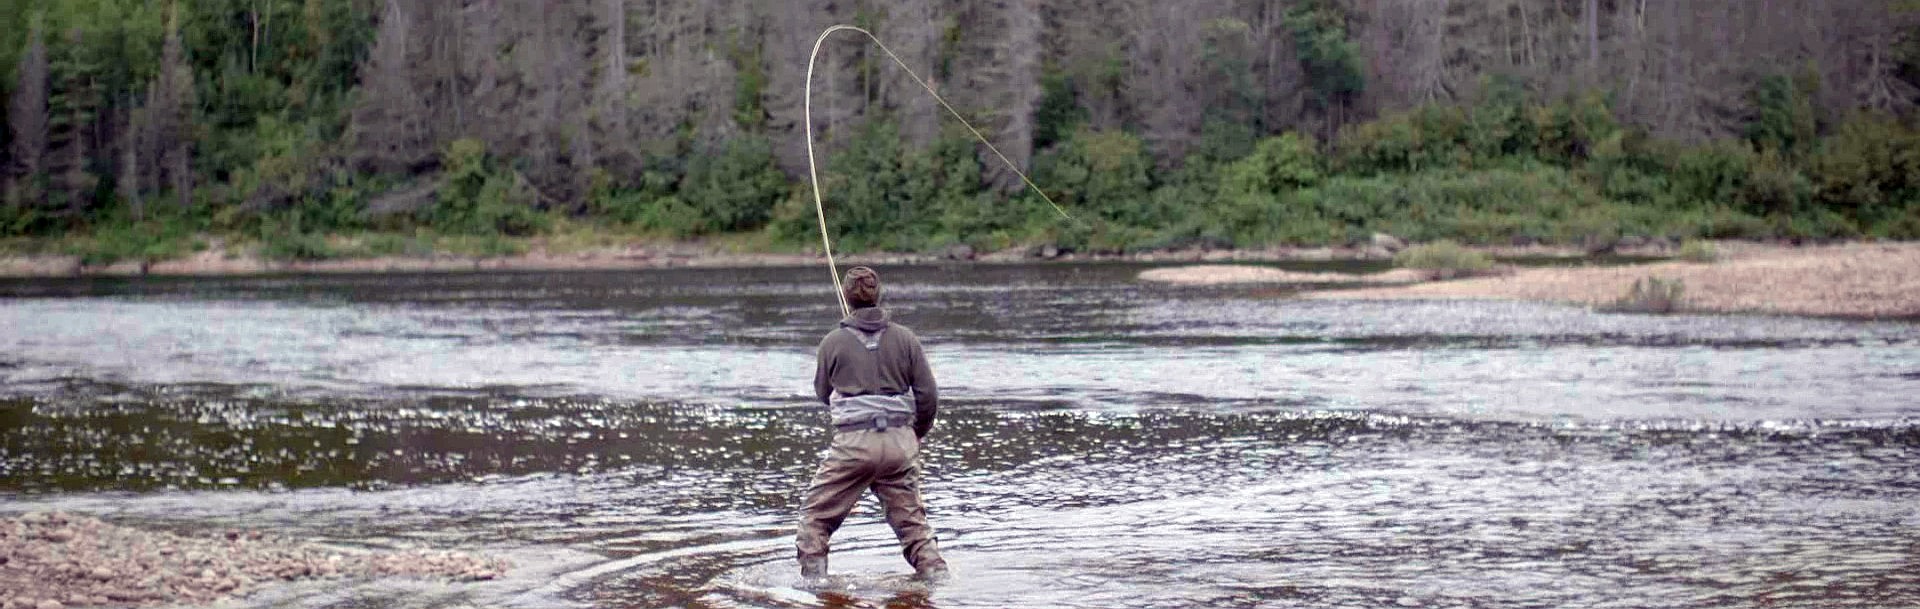 A man fighting a salmon